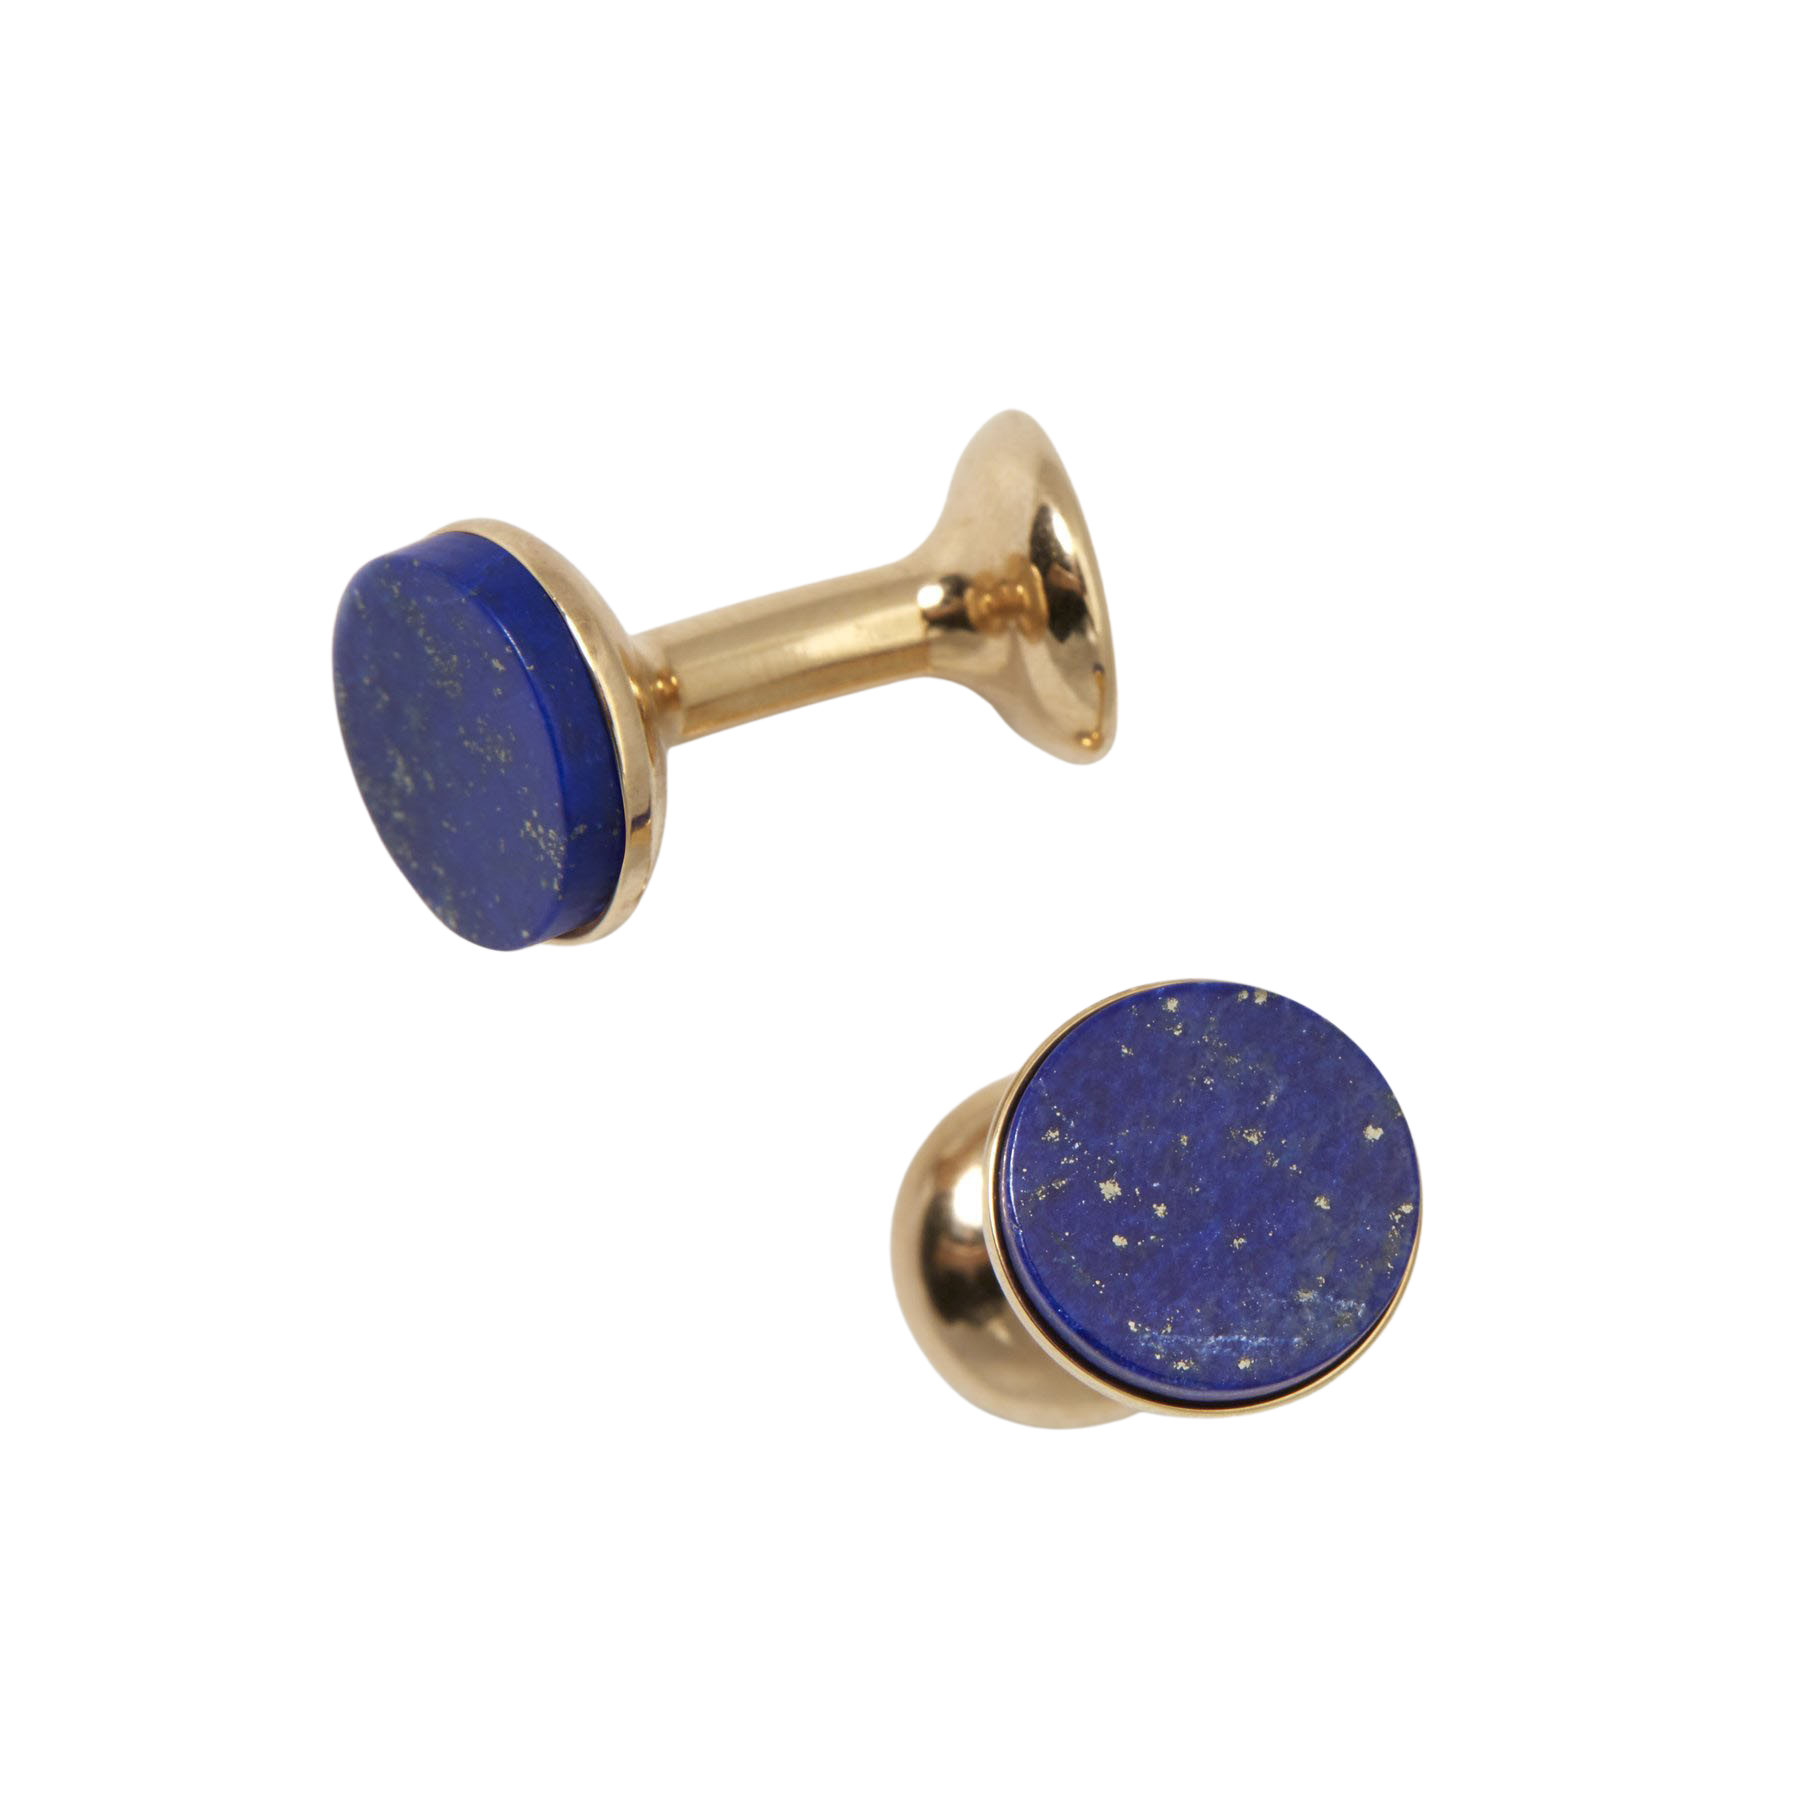 Codis Maya Gold Plated Lapis Lazuli Bow Cufflinks